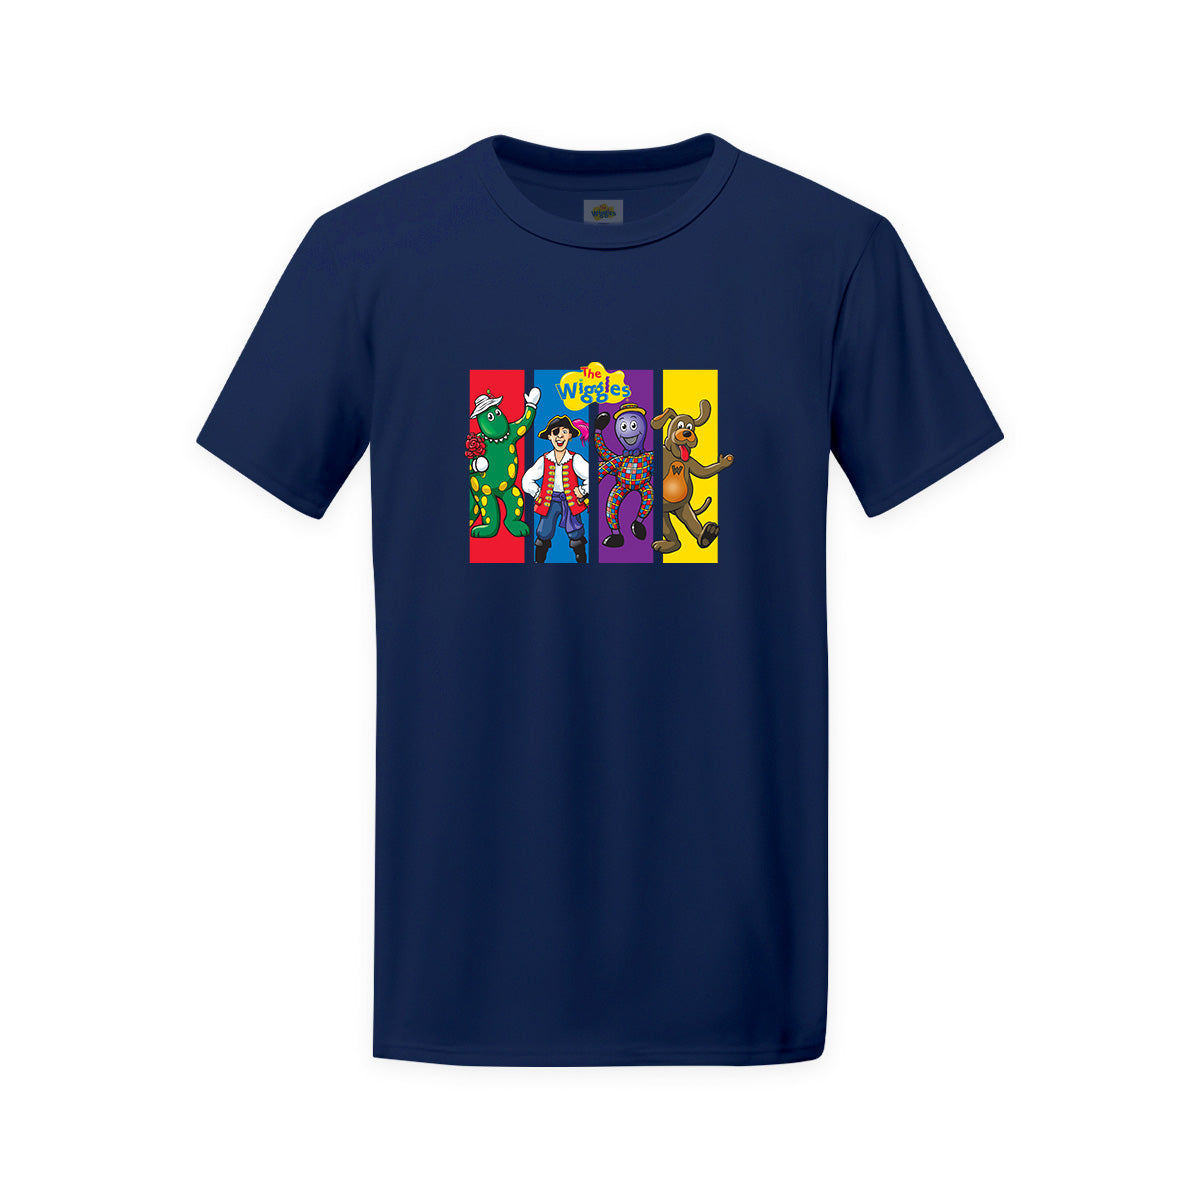 The Wiggles Adult Original Friends Retro Short Sleeve T-shirt